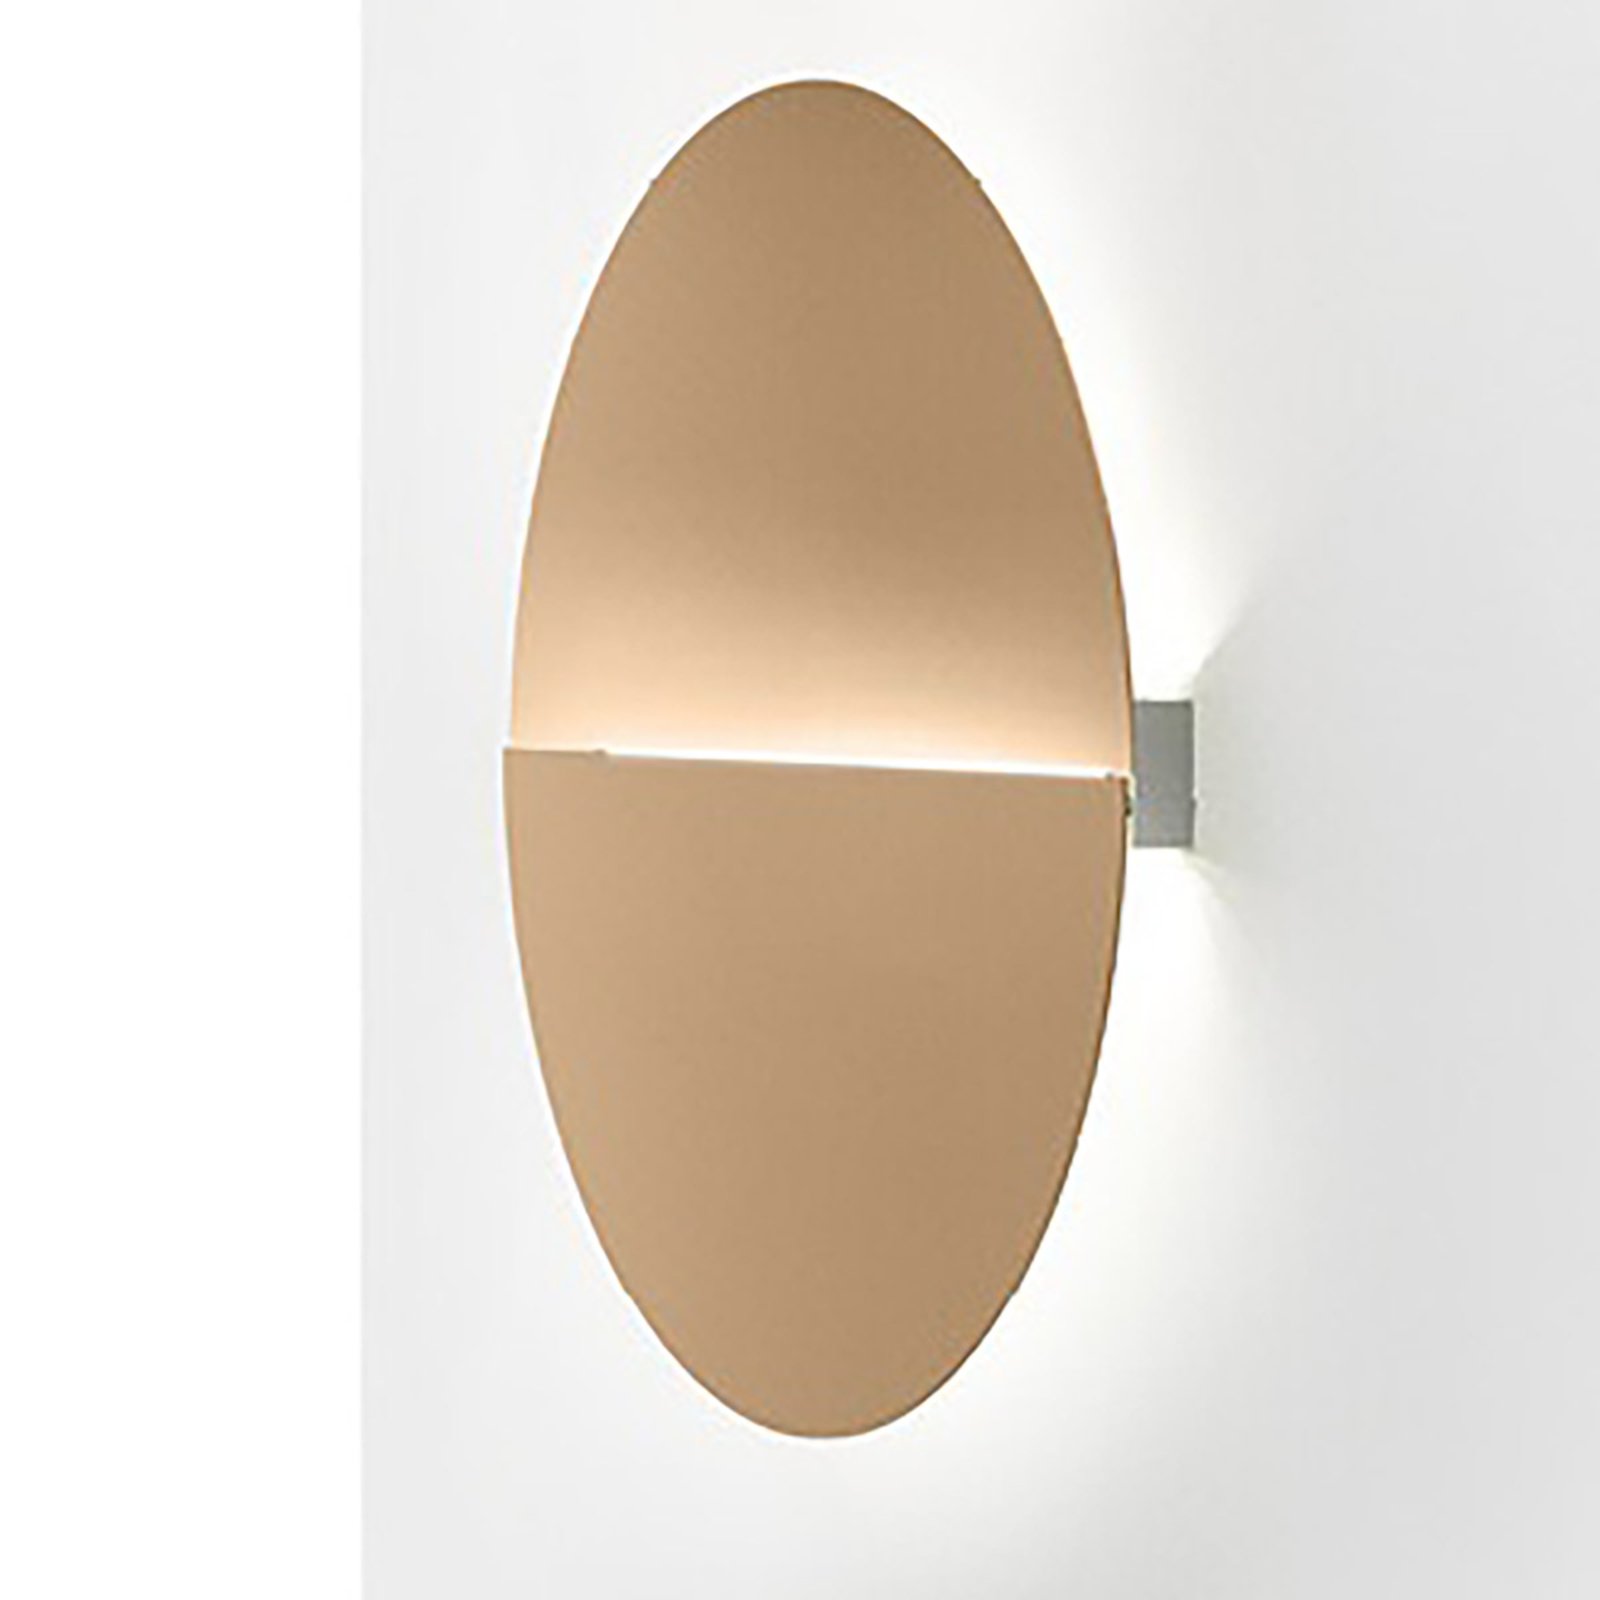 Modo Luce LED wandlamp Ø 75cm mat goud